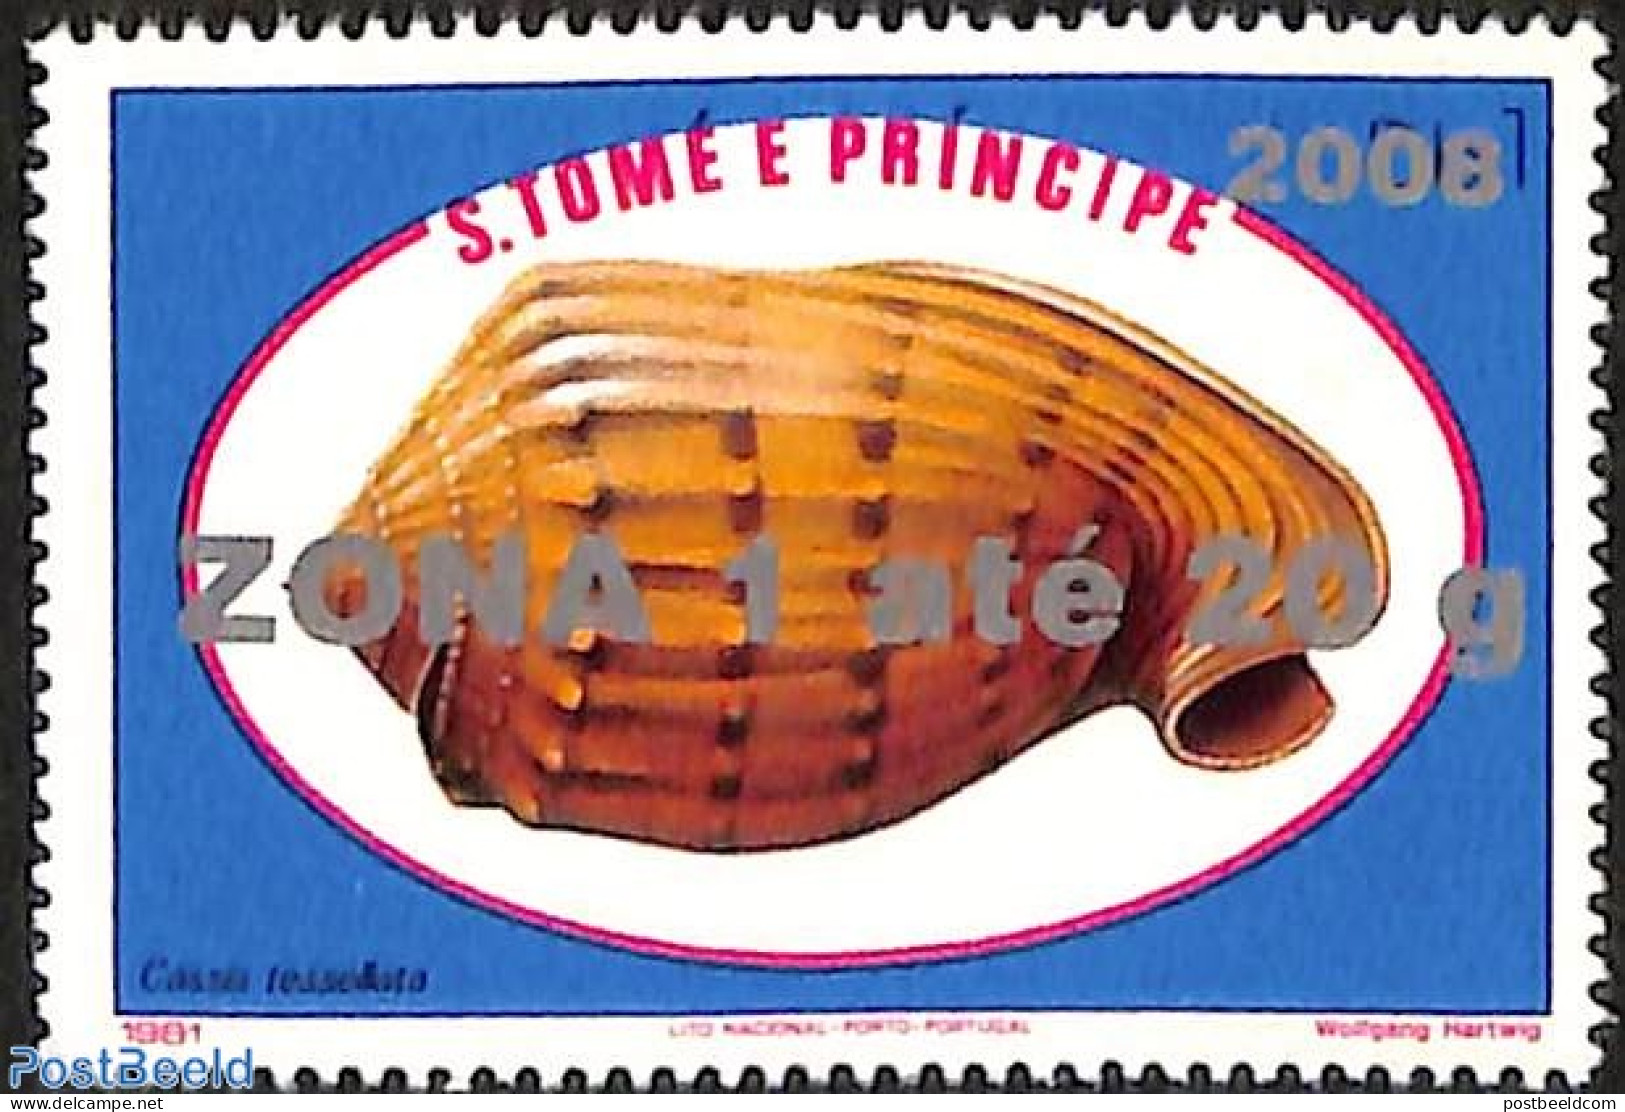 Sao Tome/Principe 2008 Cassis Tessellata Shell, Overprint, Mint NH, Nature - Shells & Crustaceans - Meereswelt